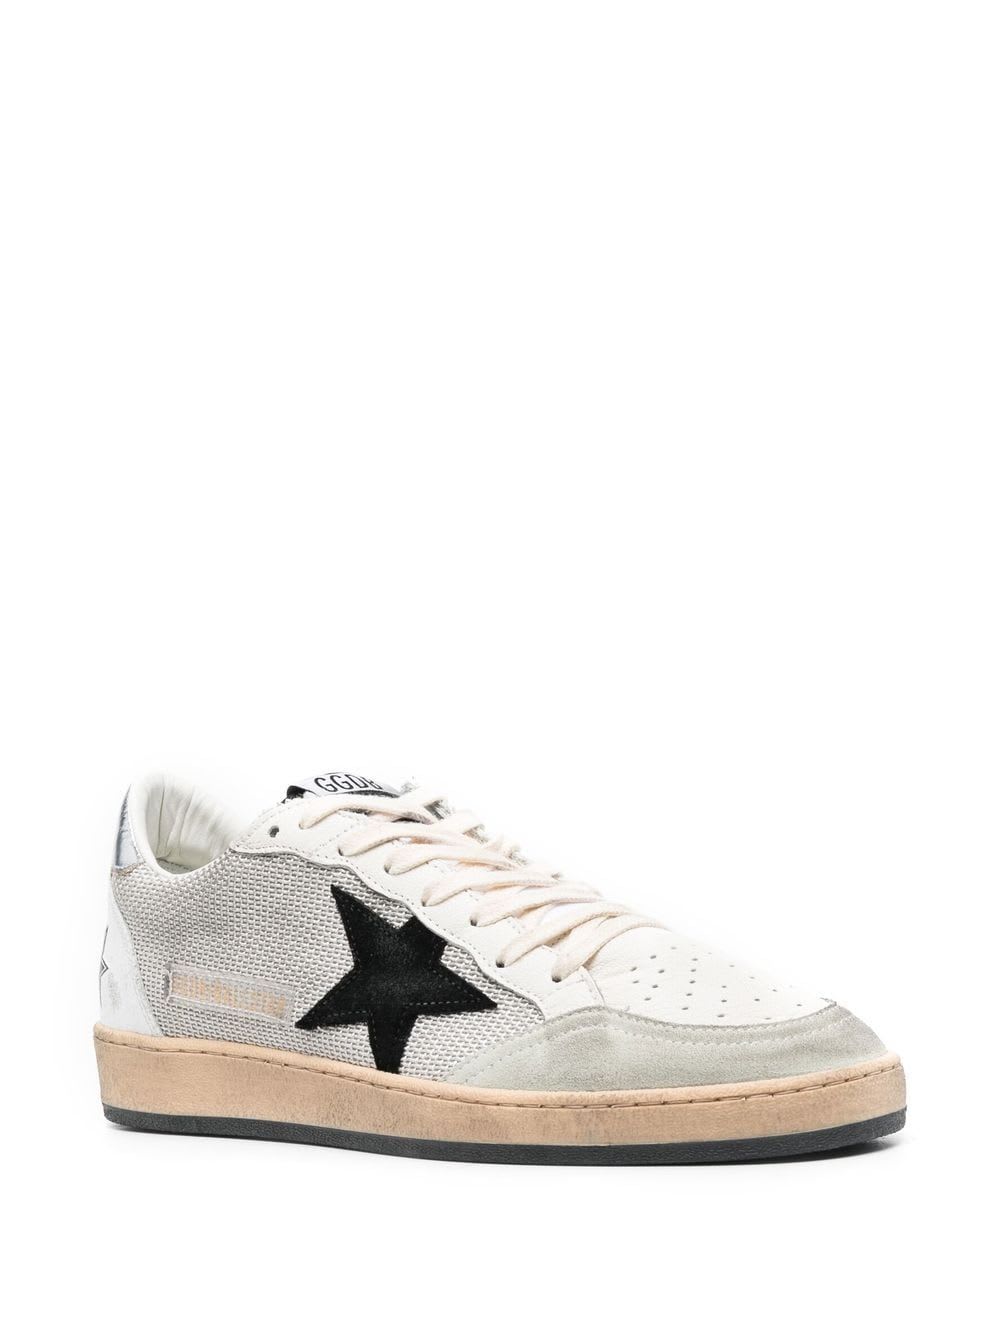 Shop Golden Goose Ball Star Sneakers In Light Silver Black White Silver